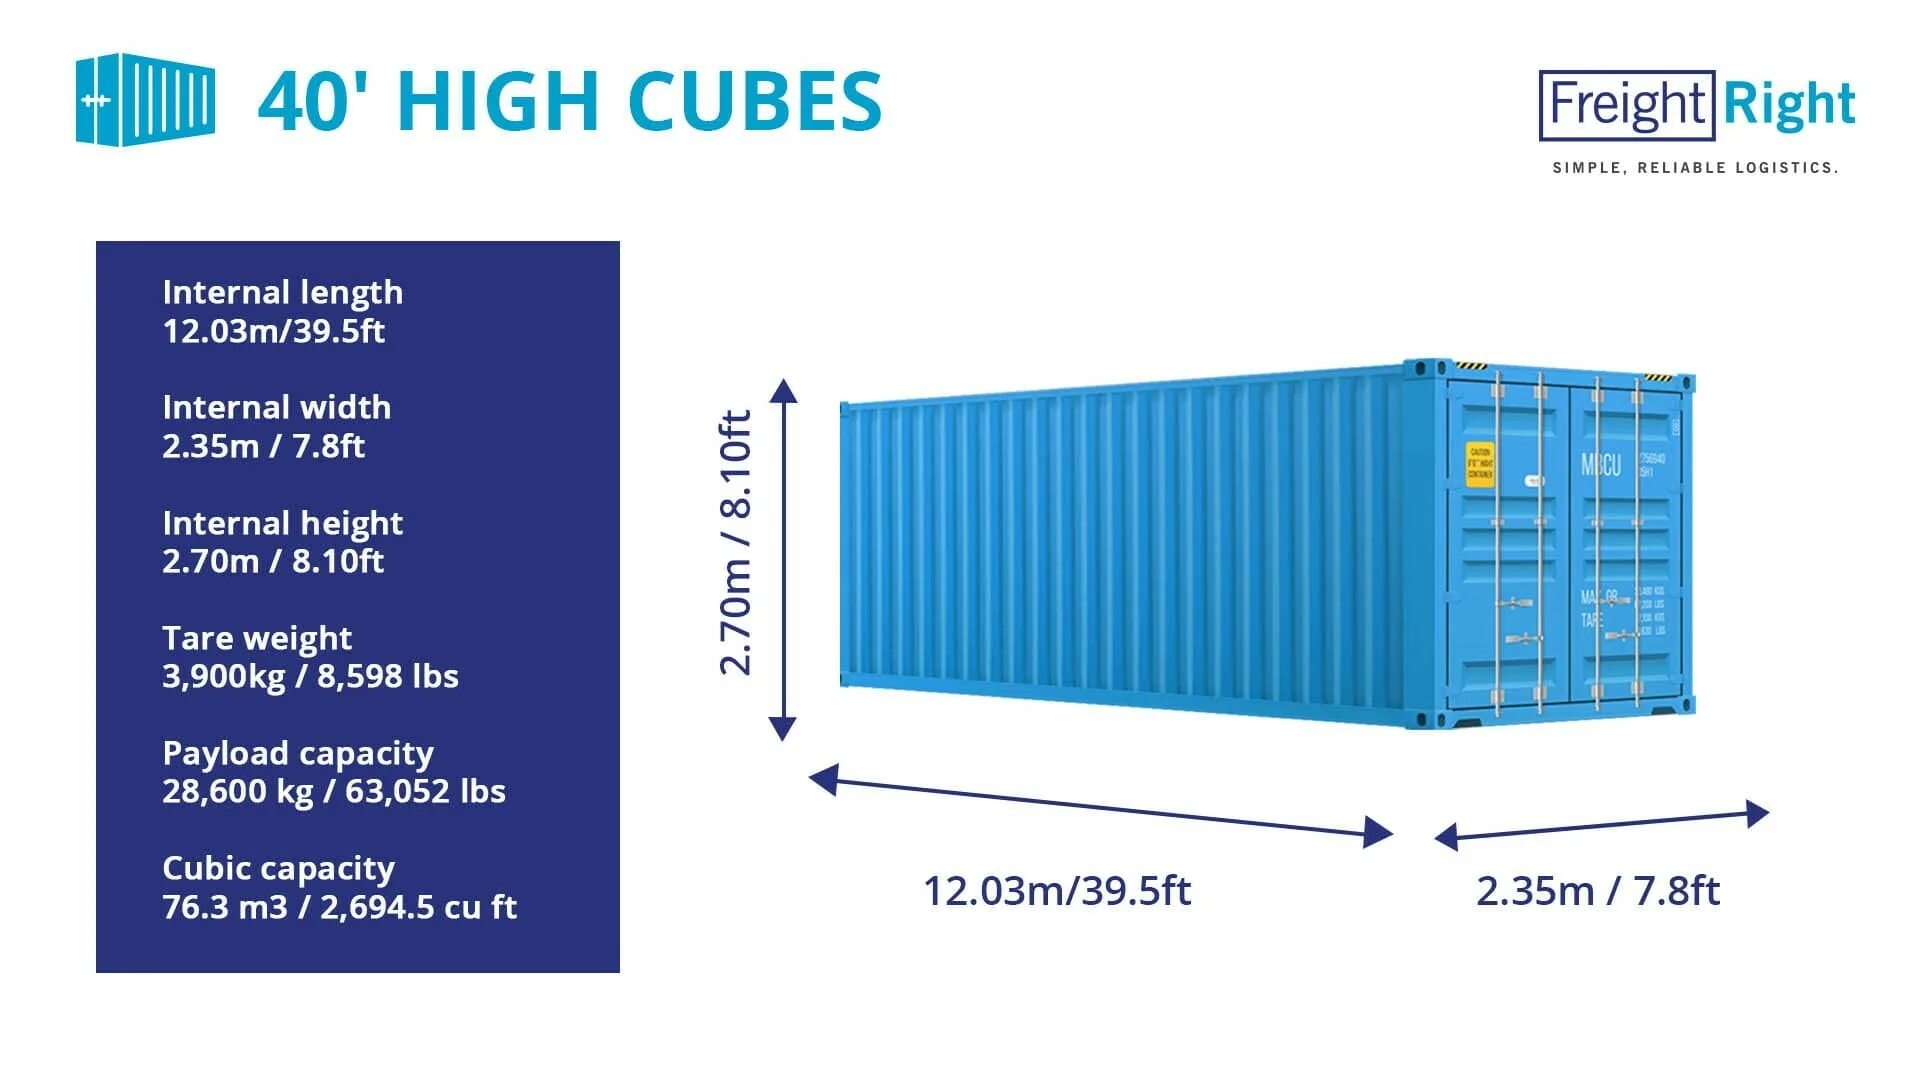 Контейнер 40 HC/hq (High Cube). Контейнер 40 фут Хай Кьюб размер. Габариты 40 фут контейнера High Cube. Размеры морского контейнера 40 футов High Cube.